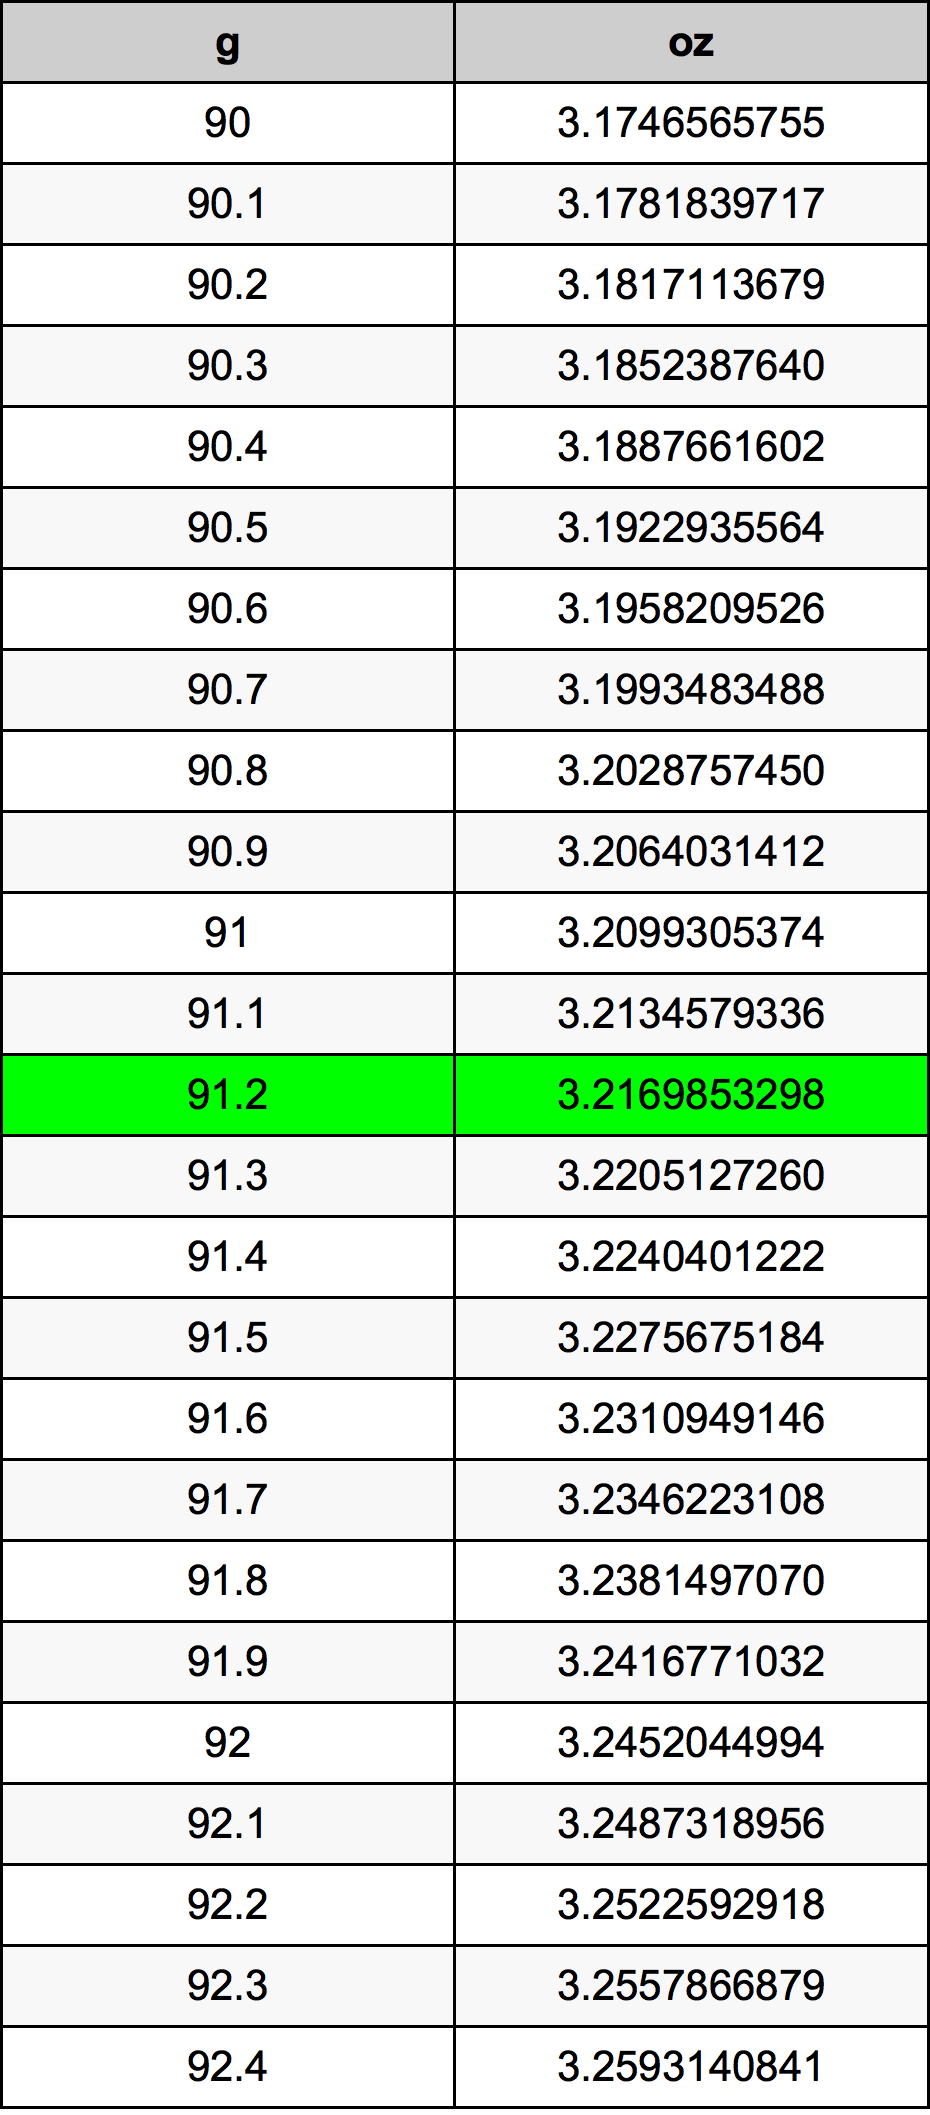 91.2 غرام جدول تحويل